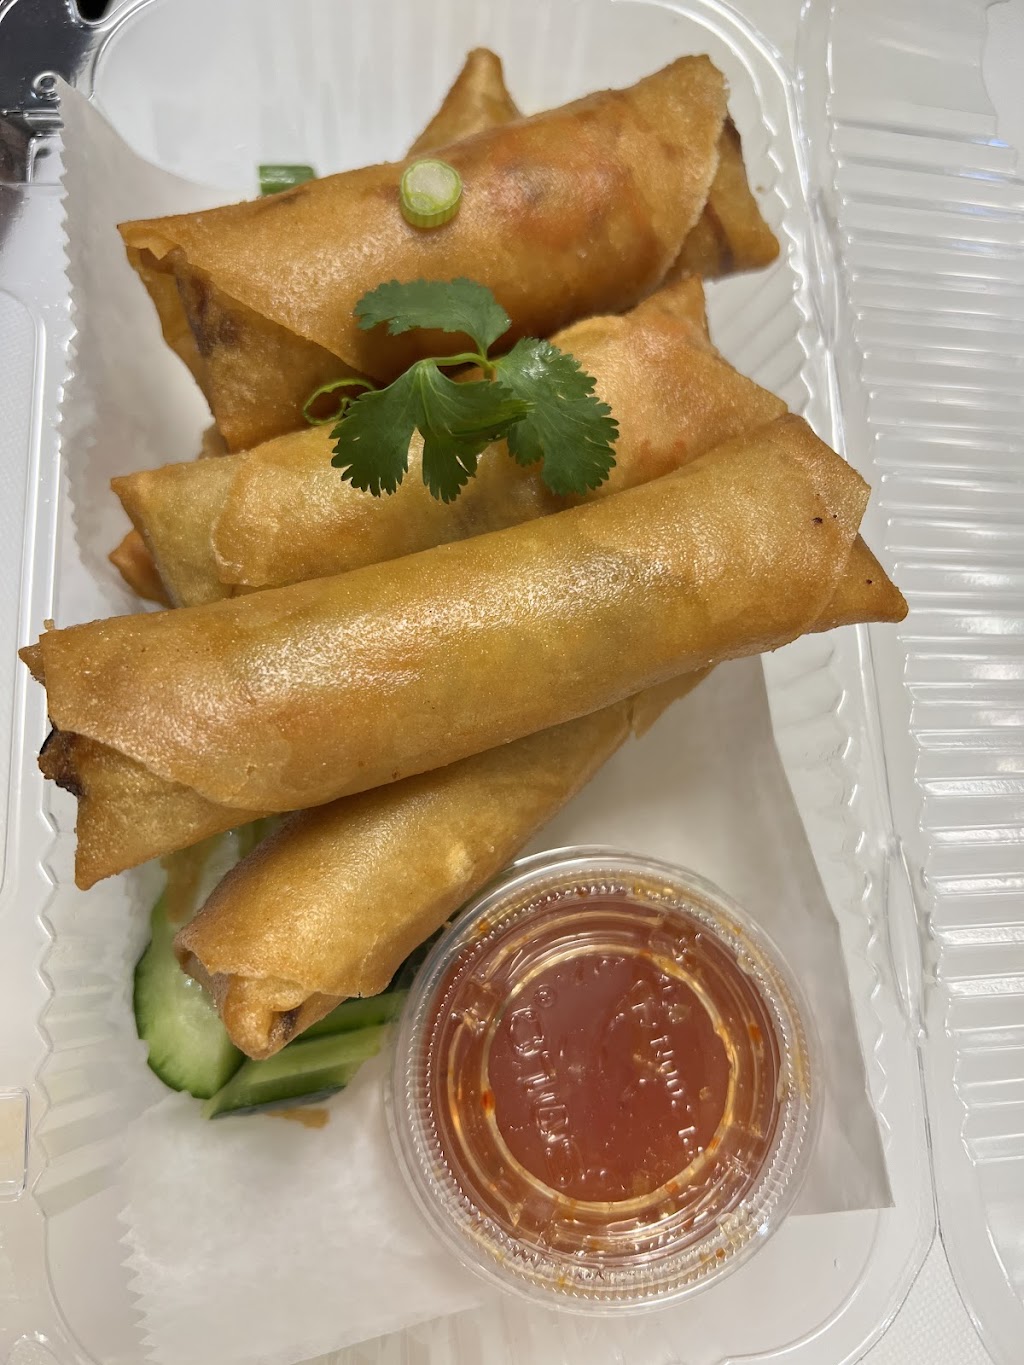 Khao Soi Thai Street Food | 811 Honea Egypt Rd, Magnolia, TX 77354, USA | Phone: (346) 495-8718